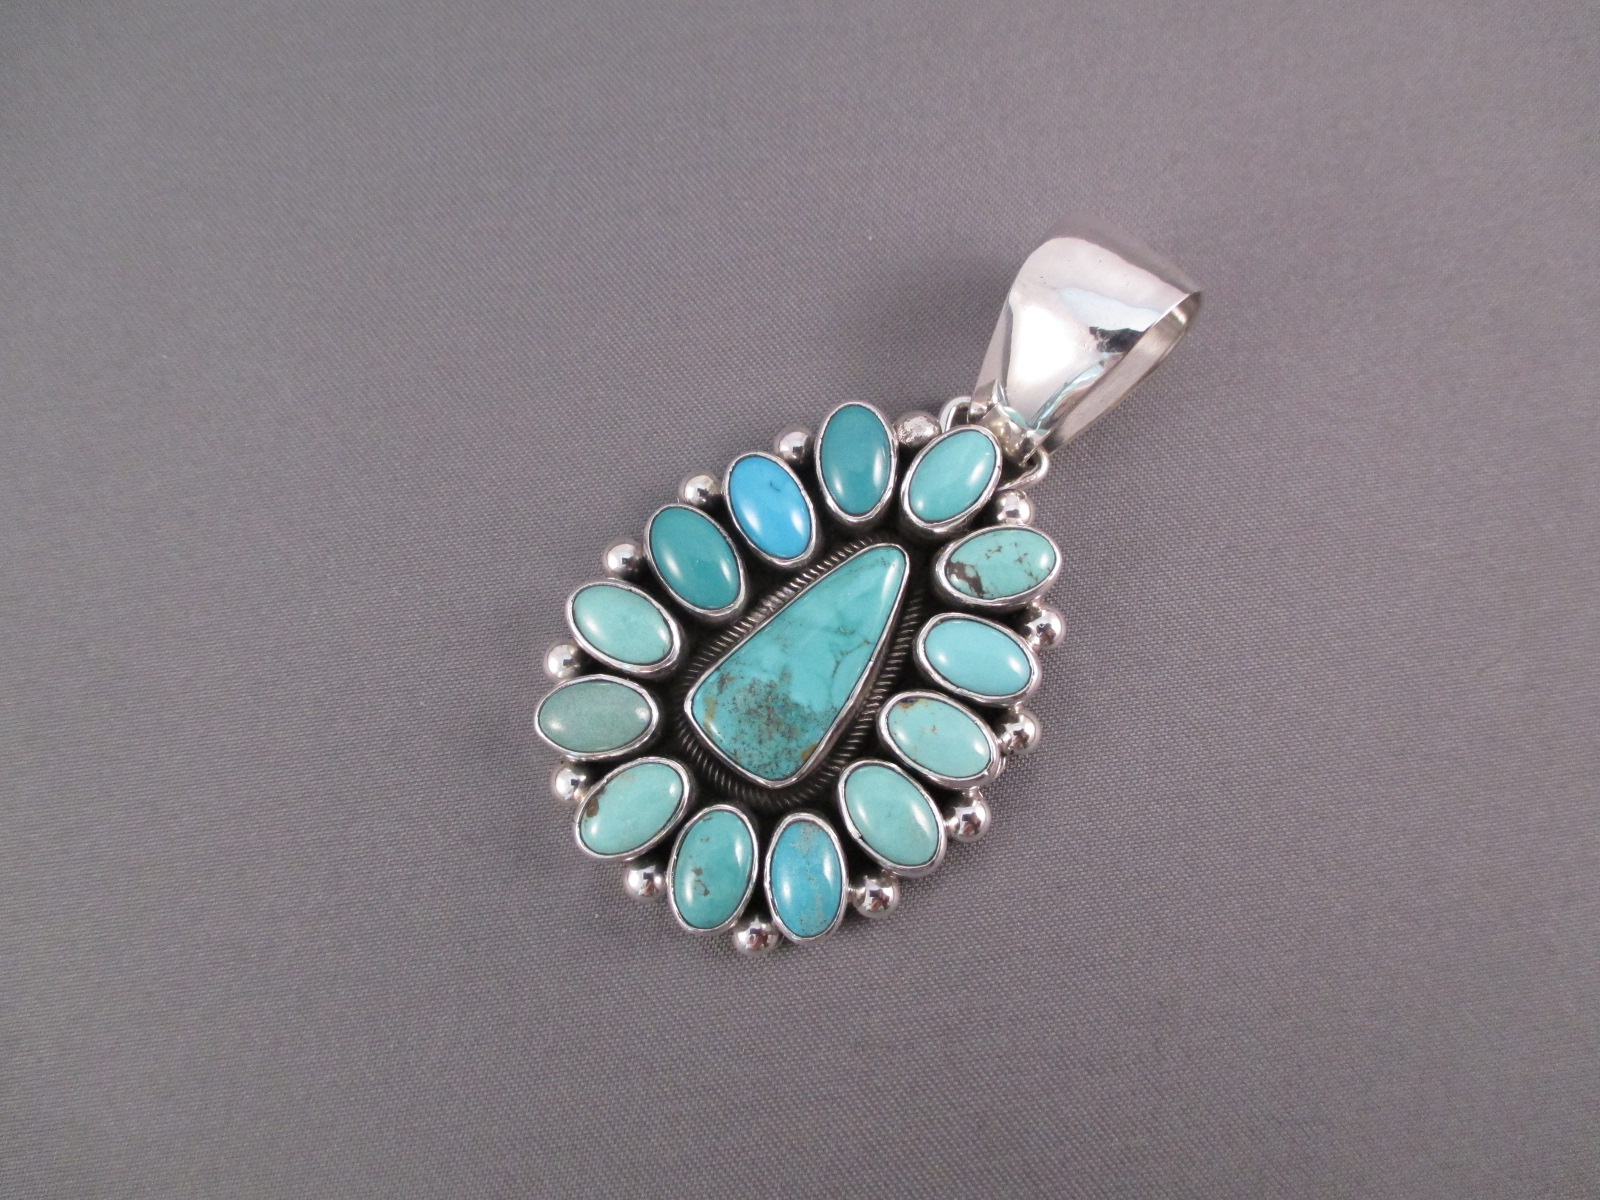 Turquoise Pendant by Navajo jewelry artist, Bea Tom.